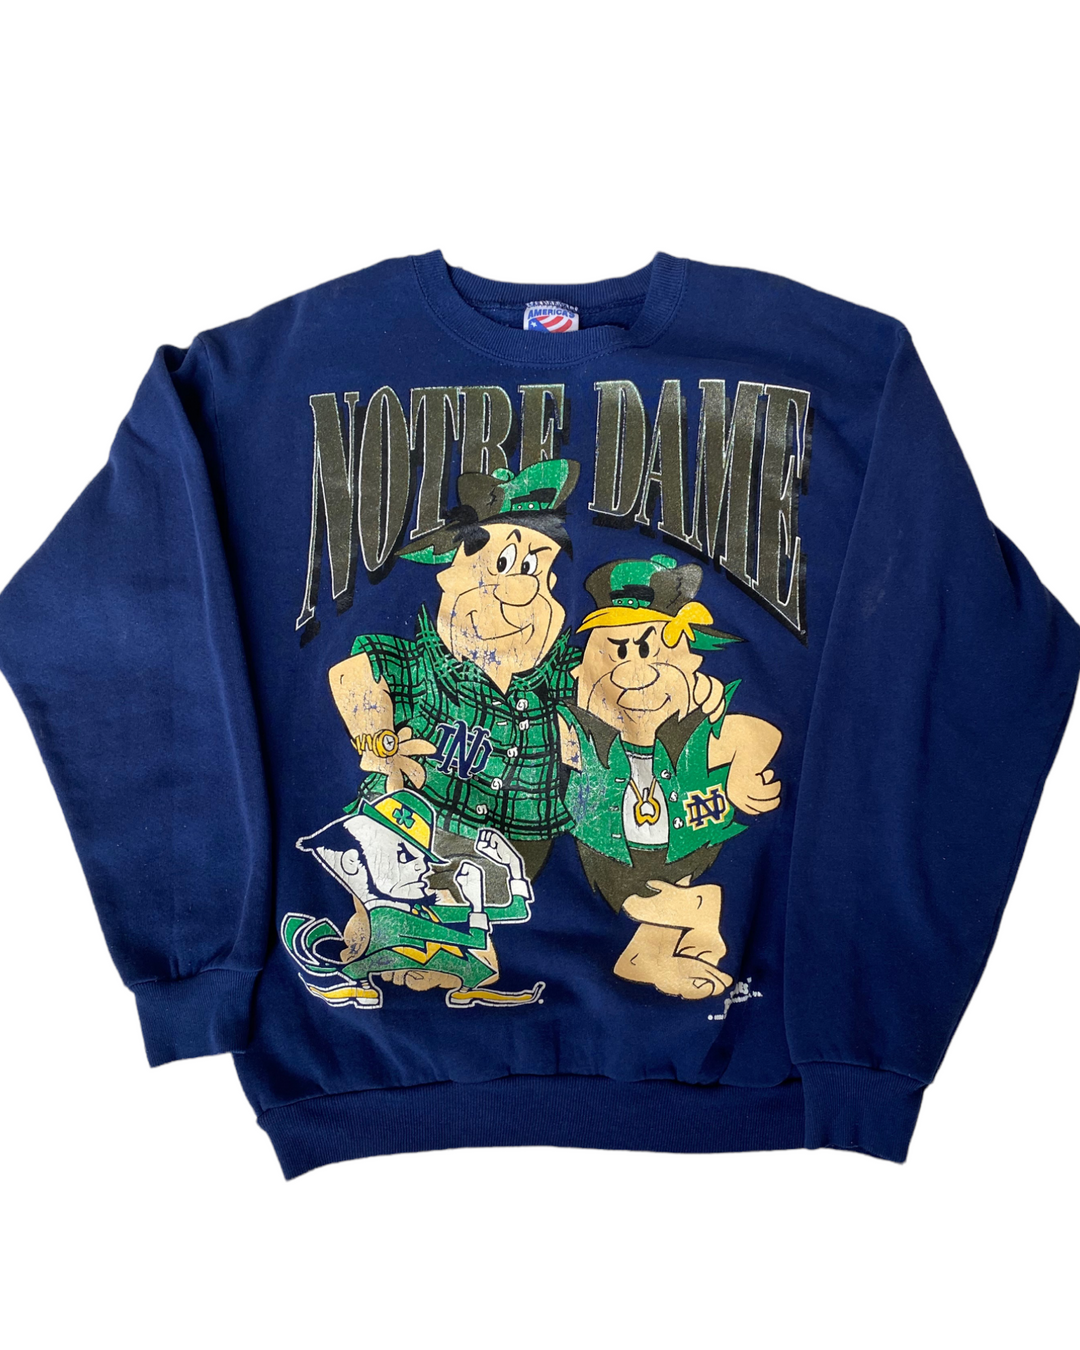 Notre Dame Rare Vintage Flintstones Sweatshirt